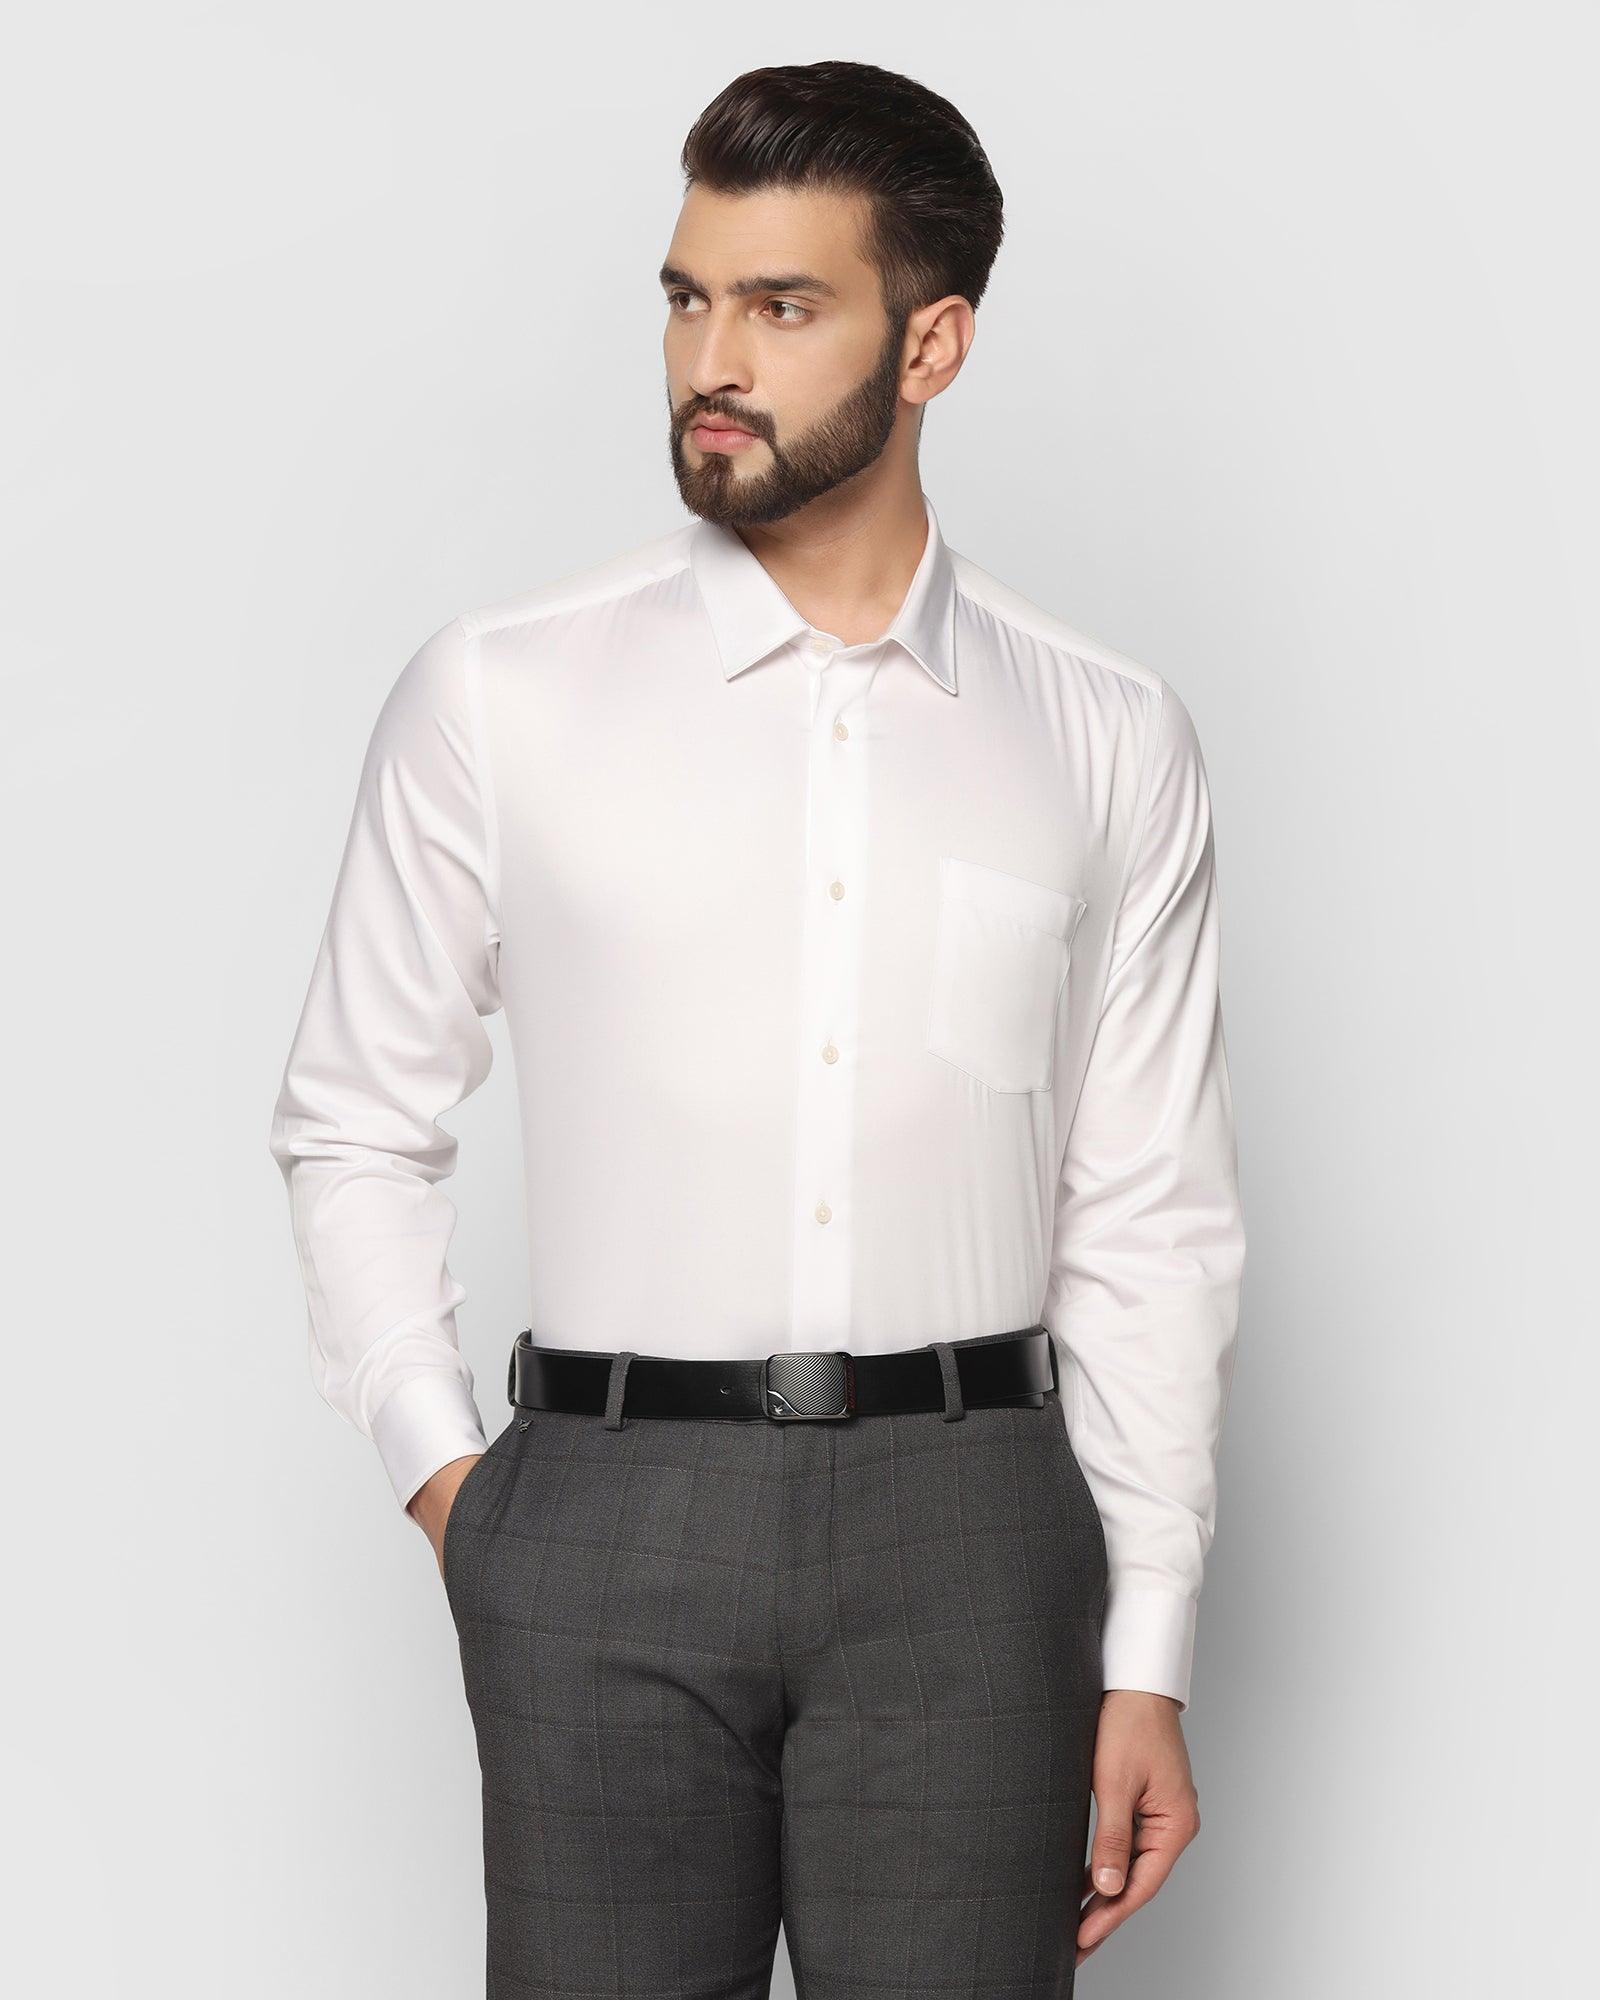 Solid Formal Shirt in White (Sailor) - Blackberrys